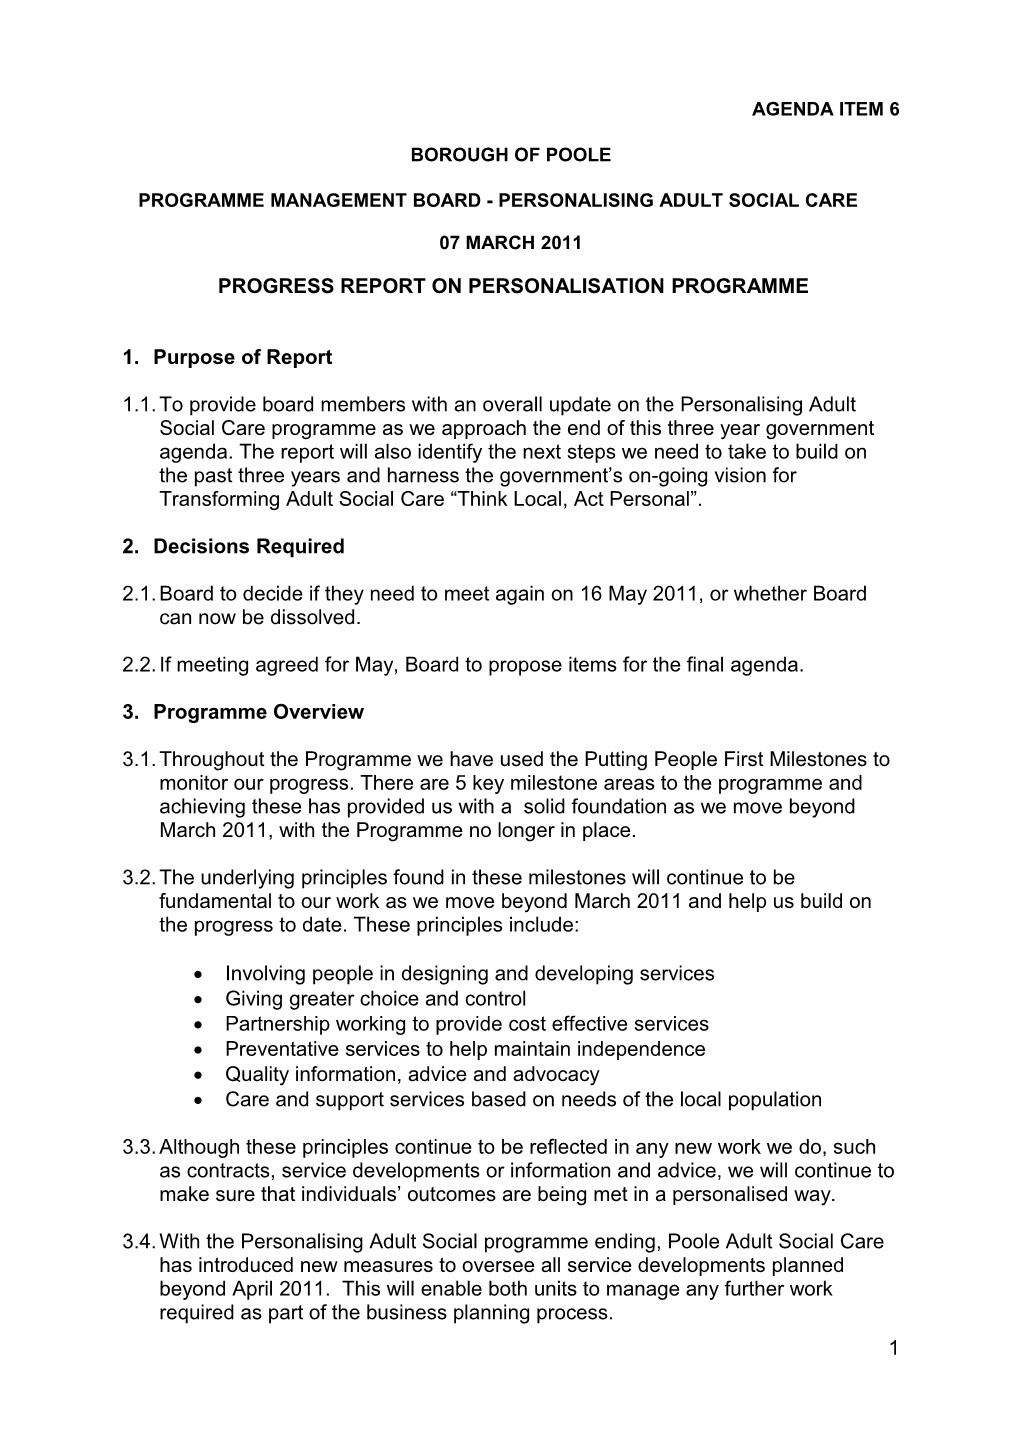 Progress Report on Personalisation Programme